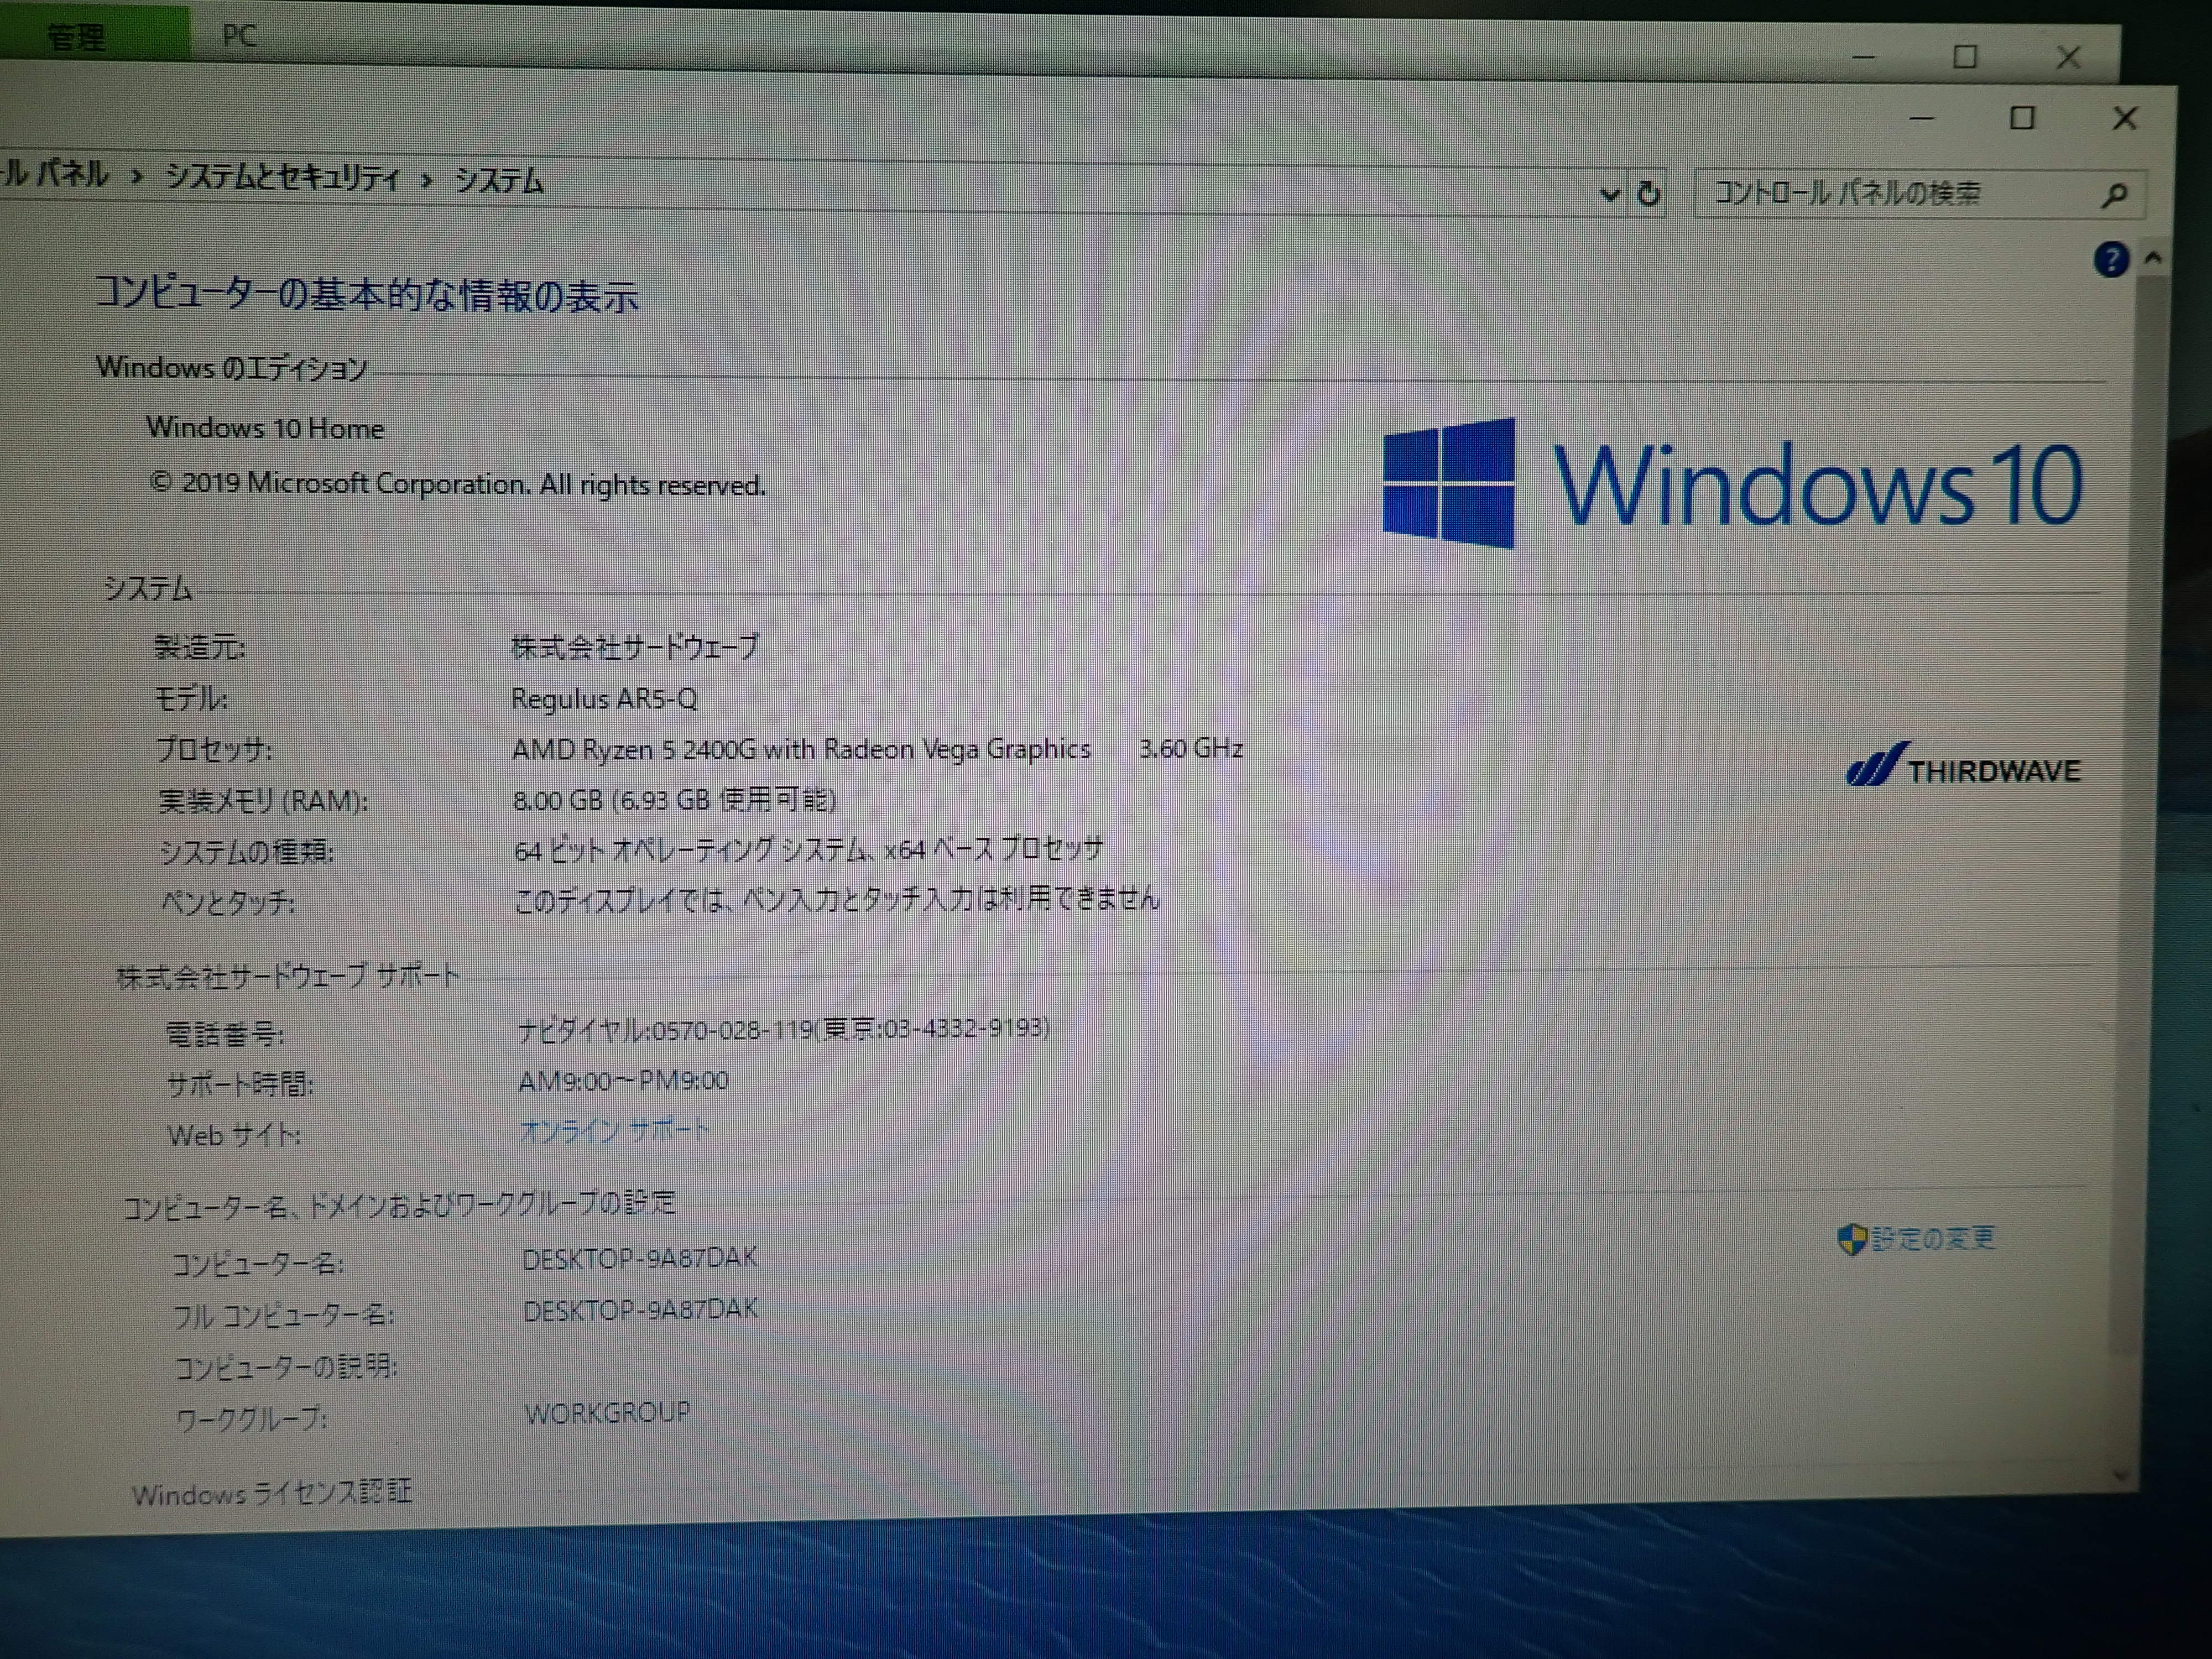 Windows10 HOME 64bit AMD Ryzen 5 2400G 3.60GHz メモリ8GB HDD1TB DVDドライブ